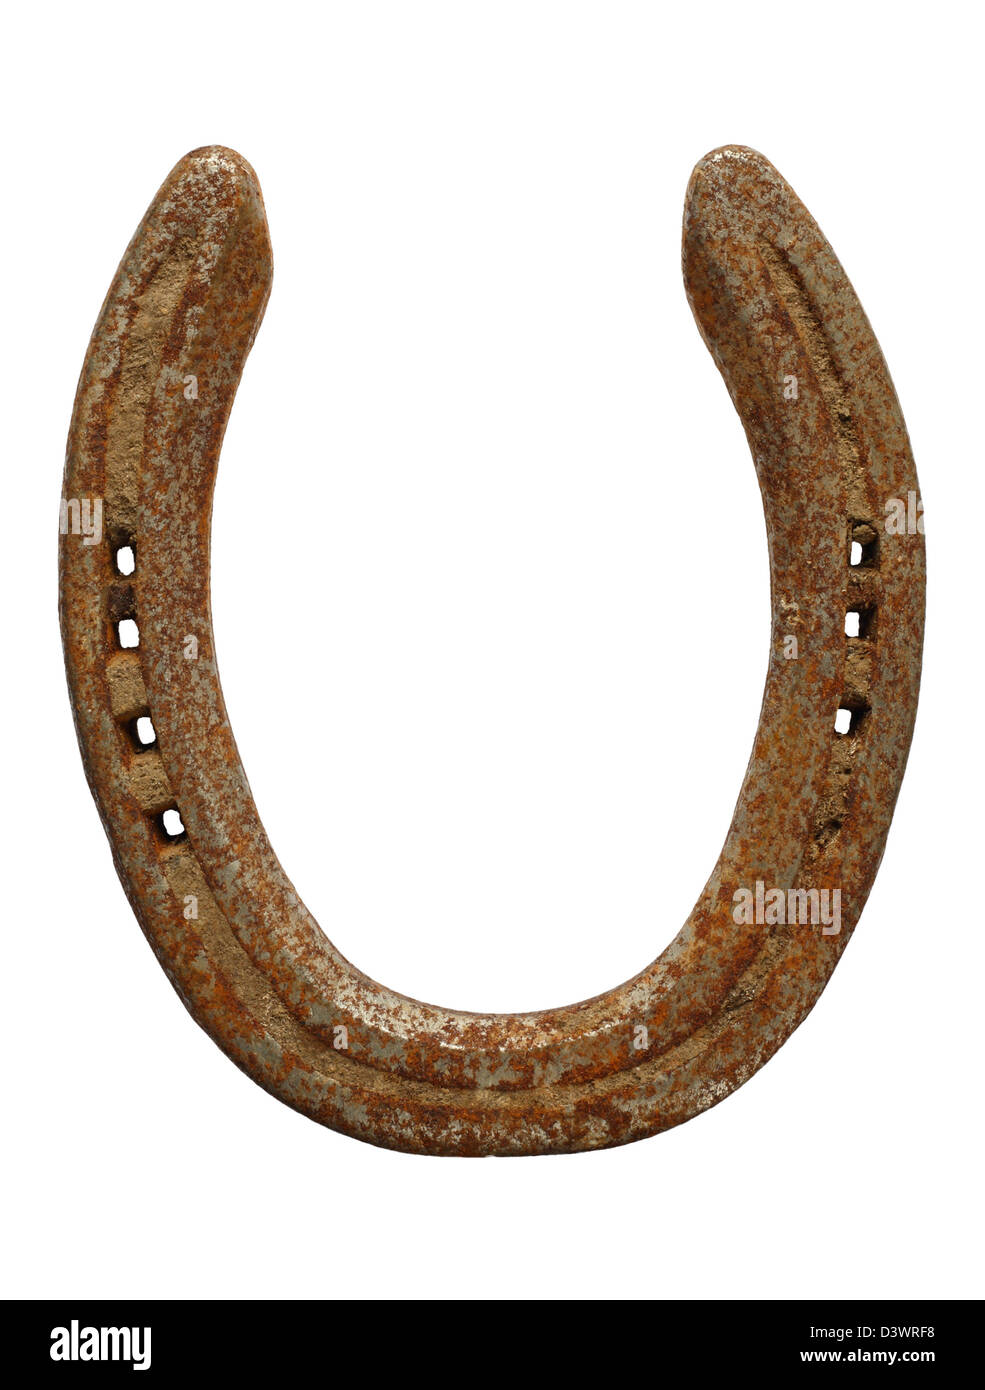 Old rusty lucky horseshoe isolated on a white background. Stock Photo